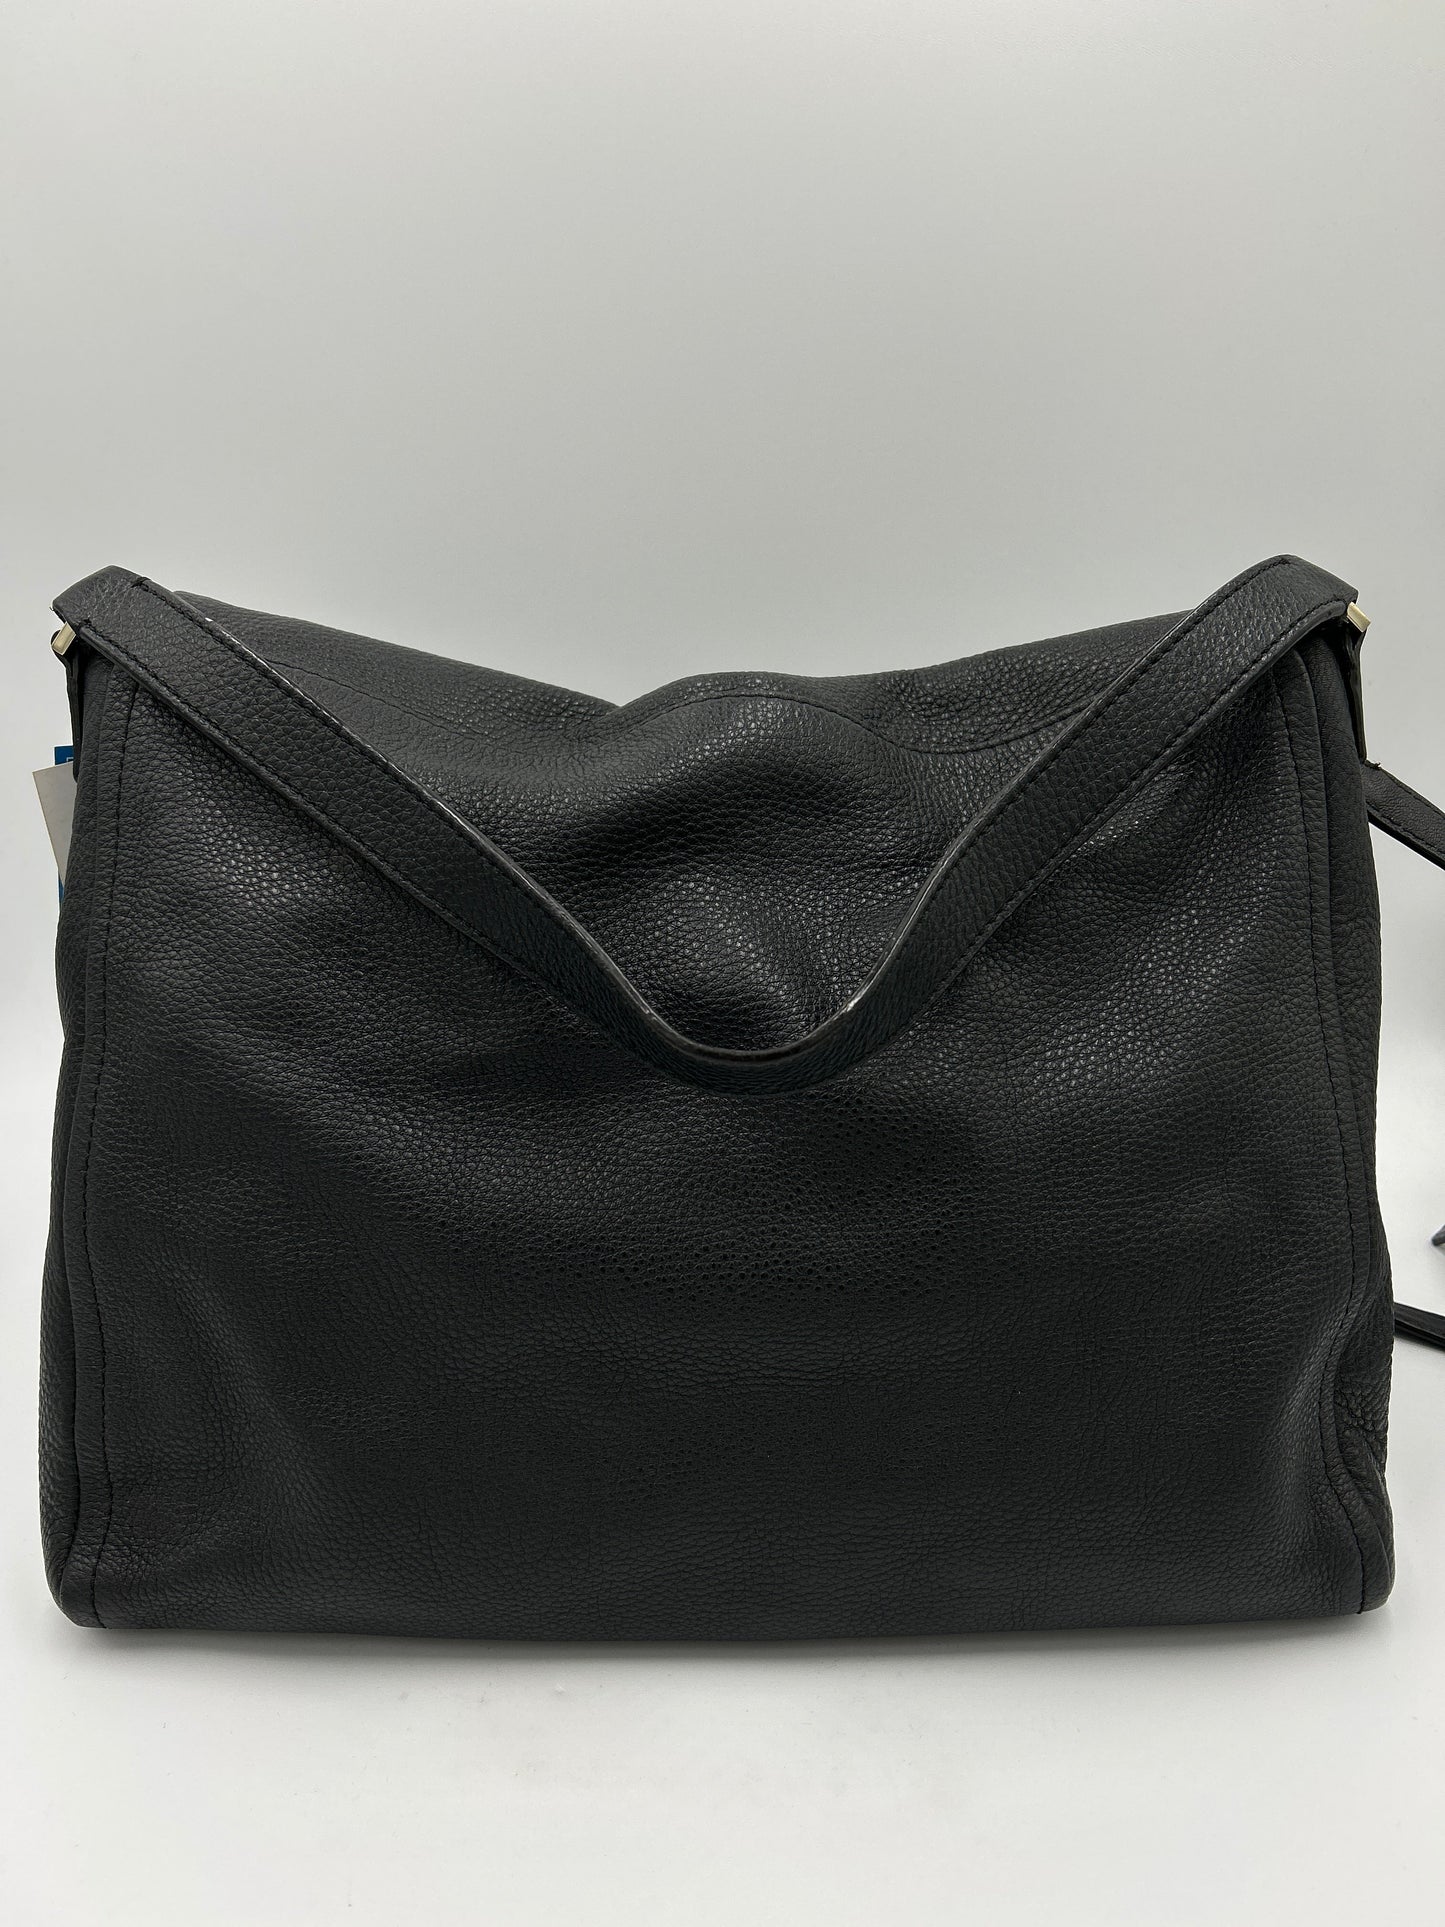 Foldover Leather Handbag By Kate Spade